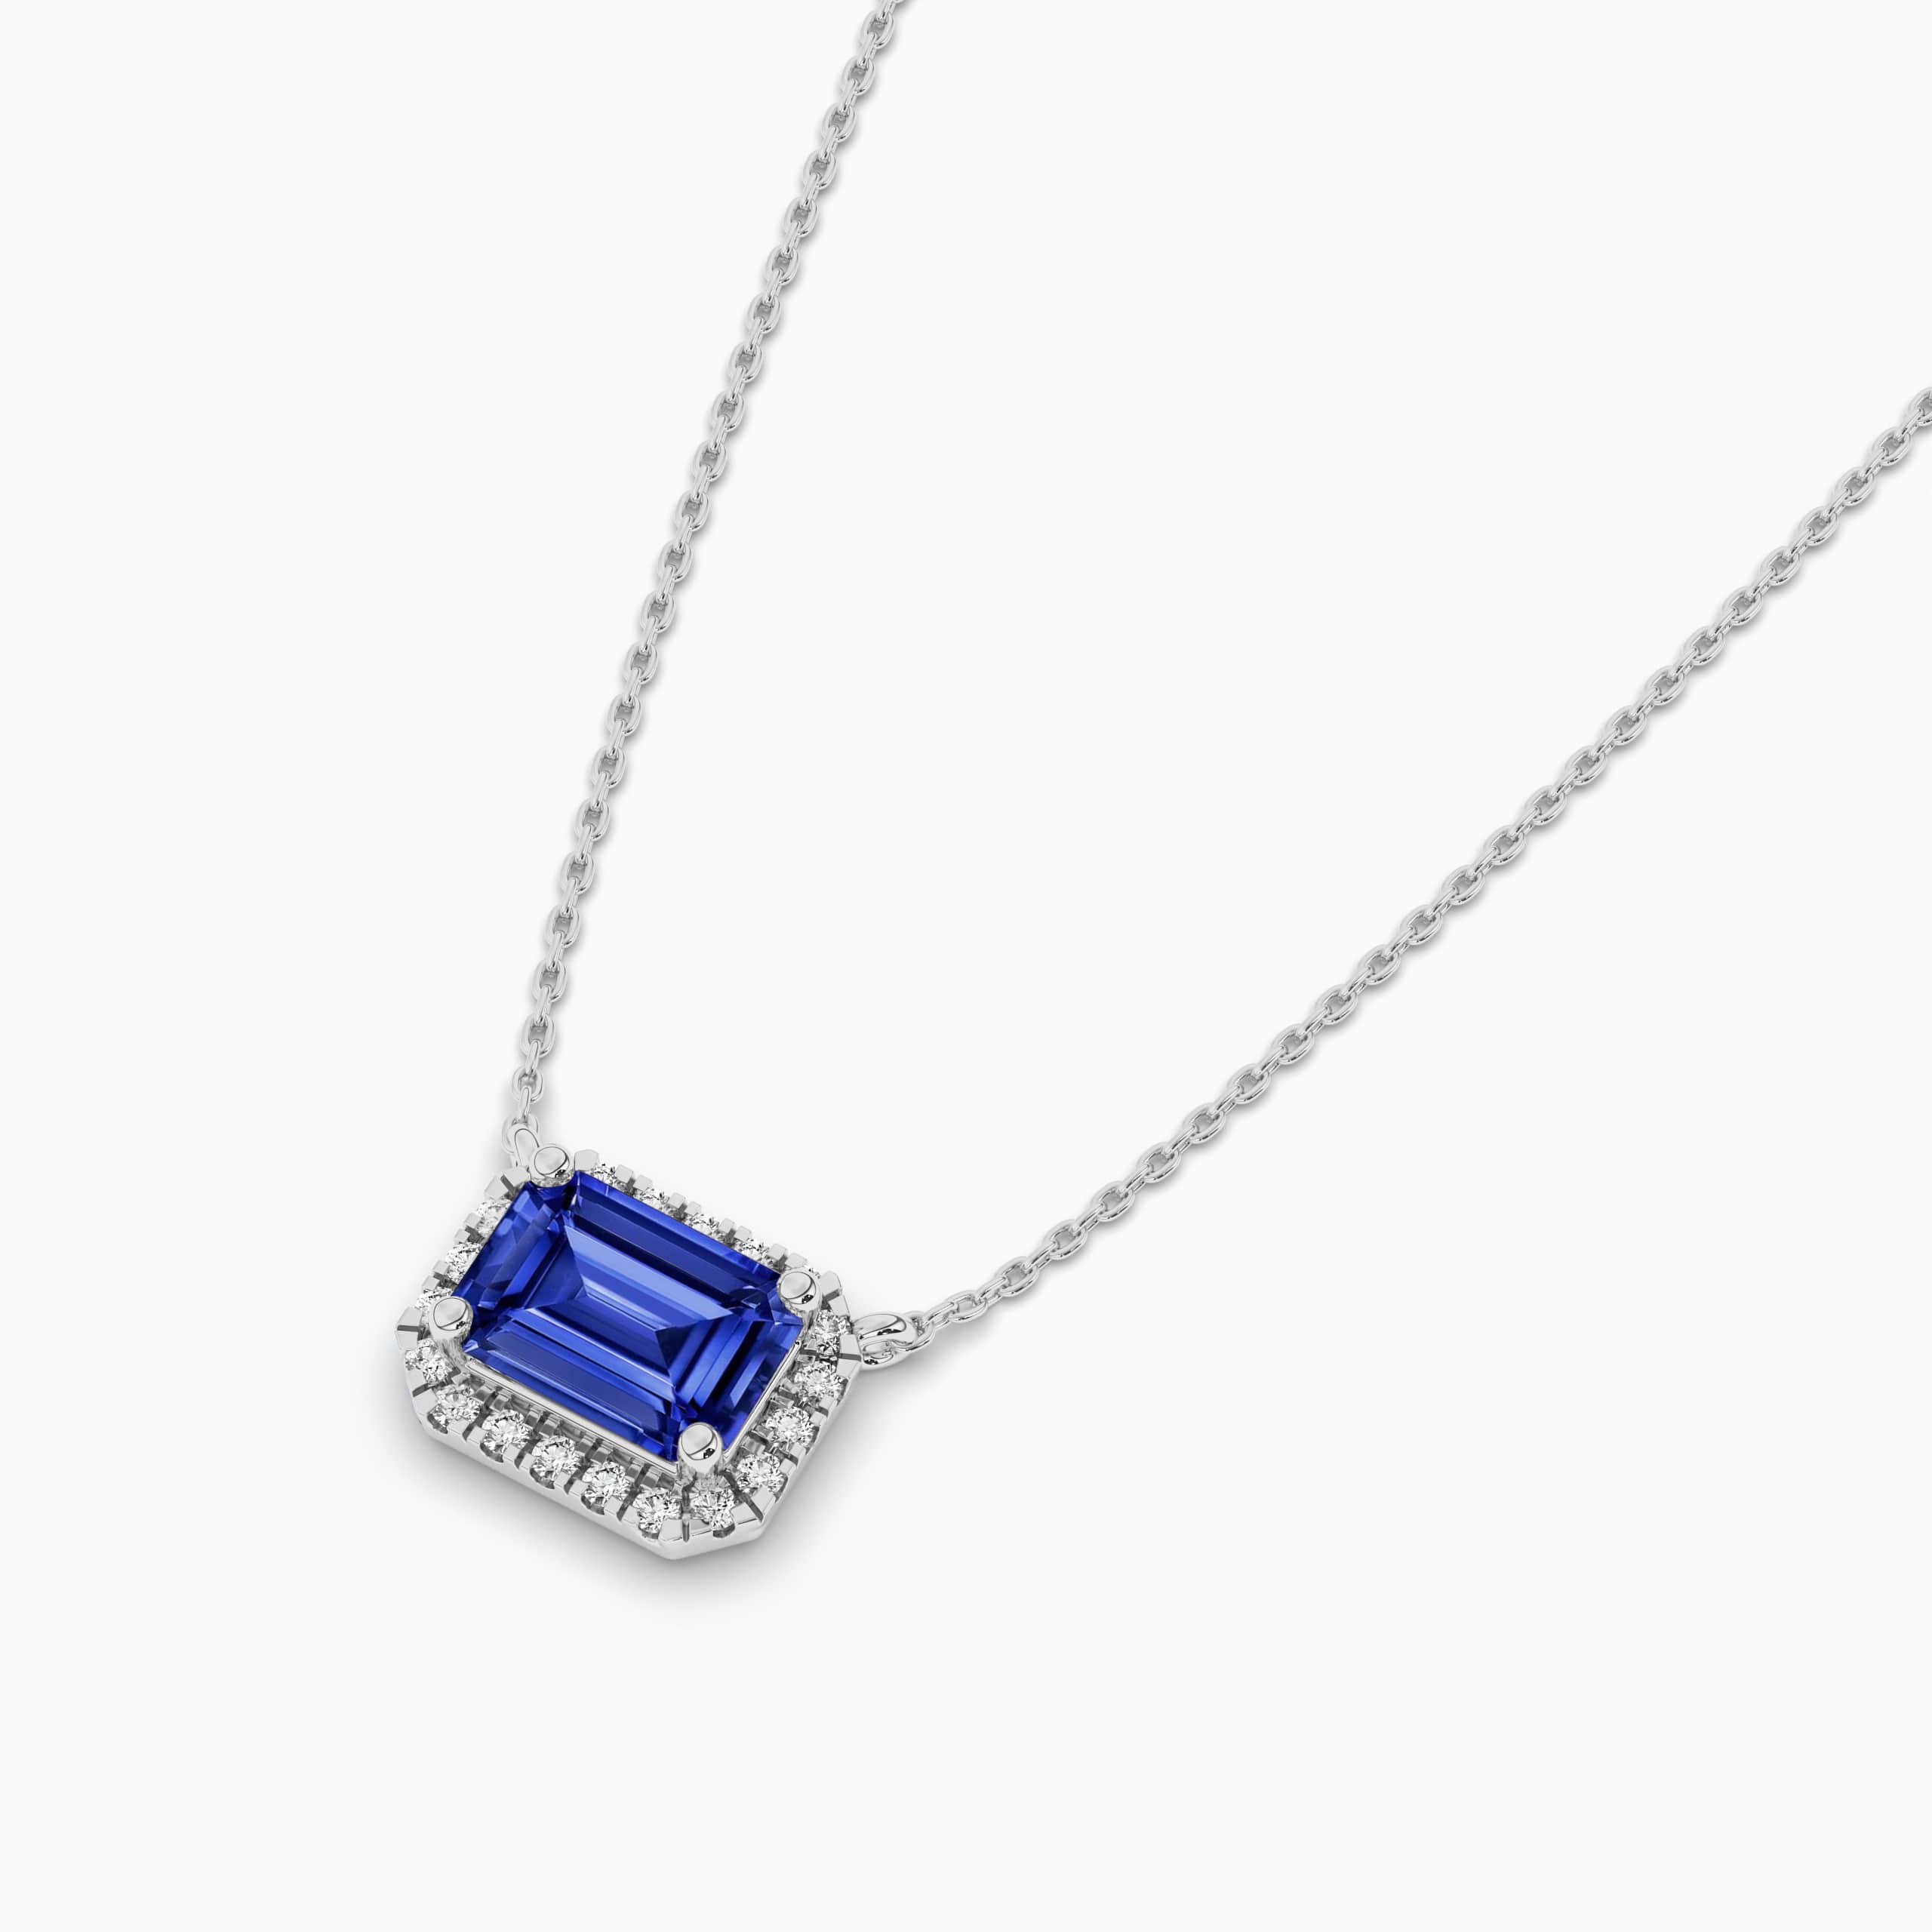 Emerald Cut Blue Sapphire Gemstone with Diamond Halo Pendant in White Gold